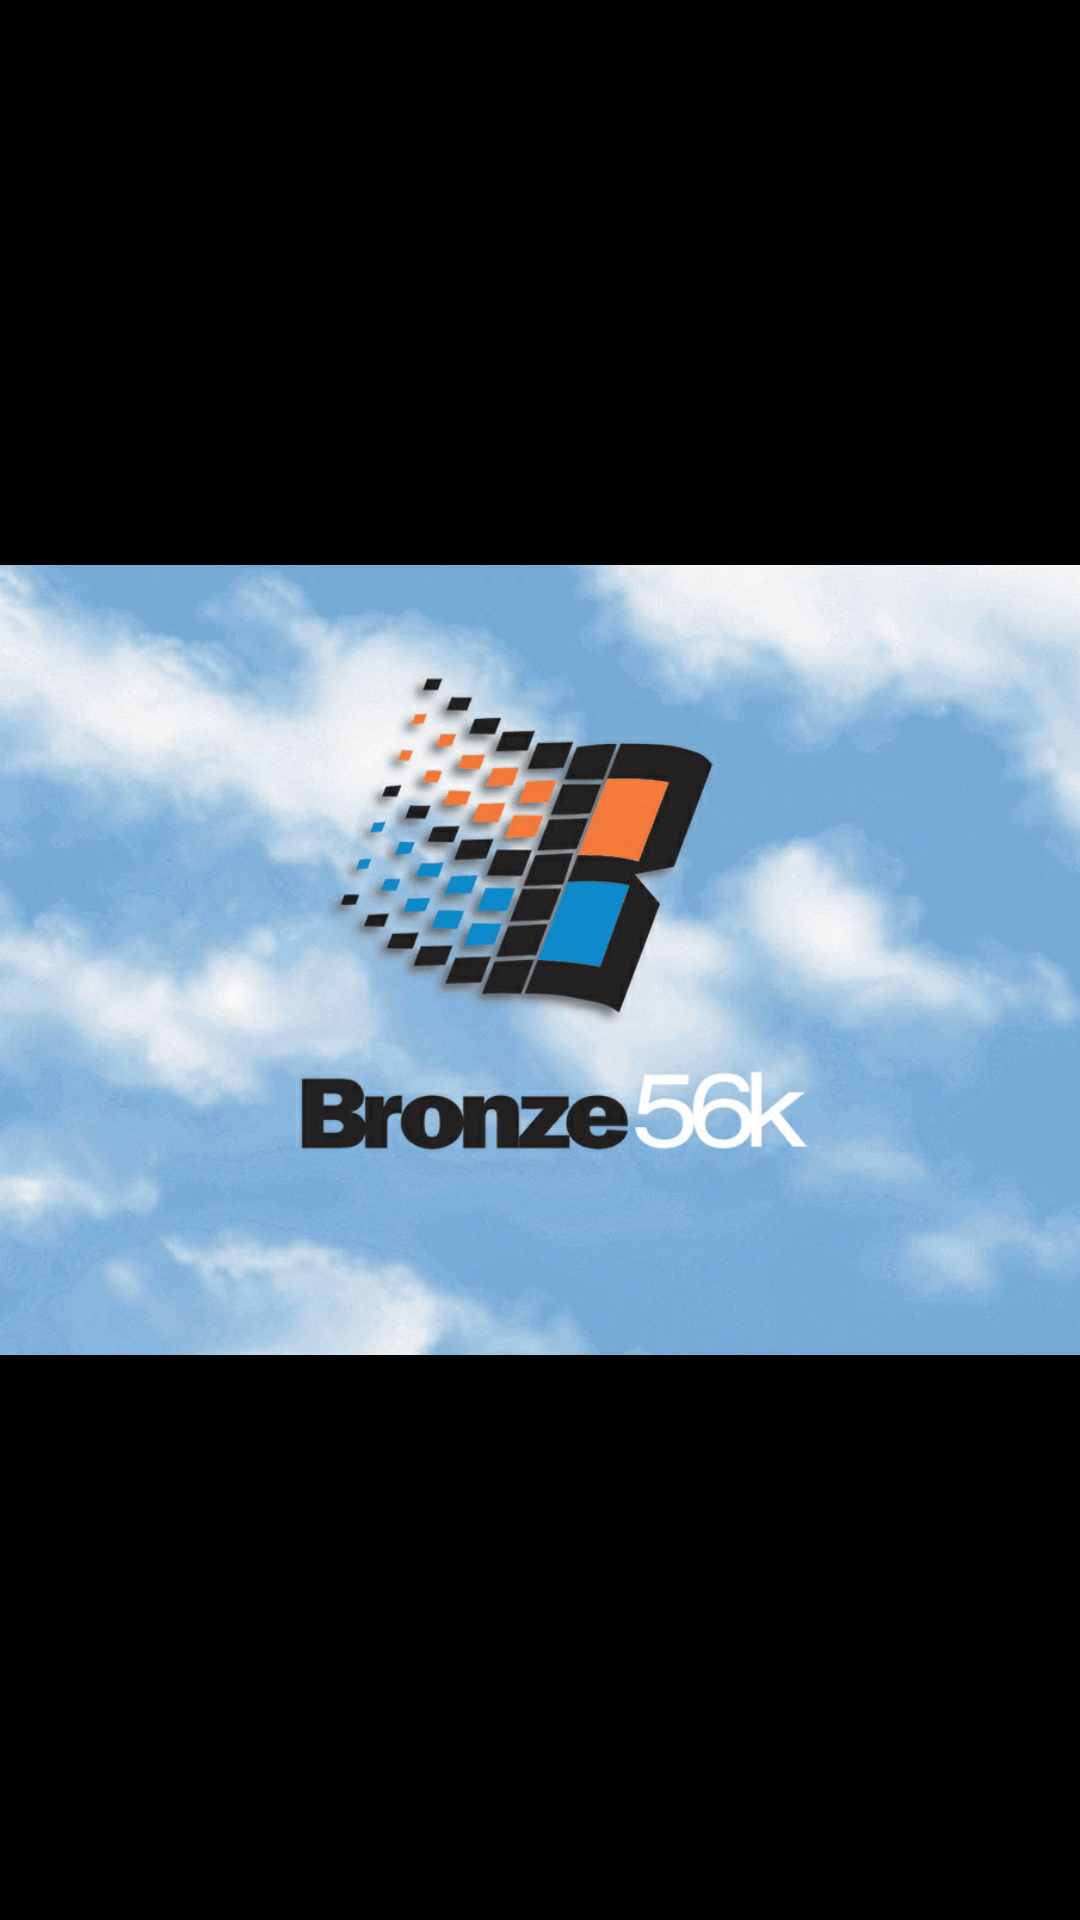 Bronze56k Logo - You guys know about Bronze 56K? : skateboarding